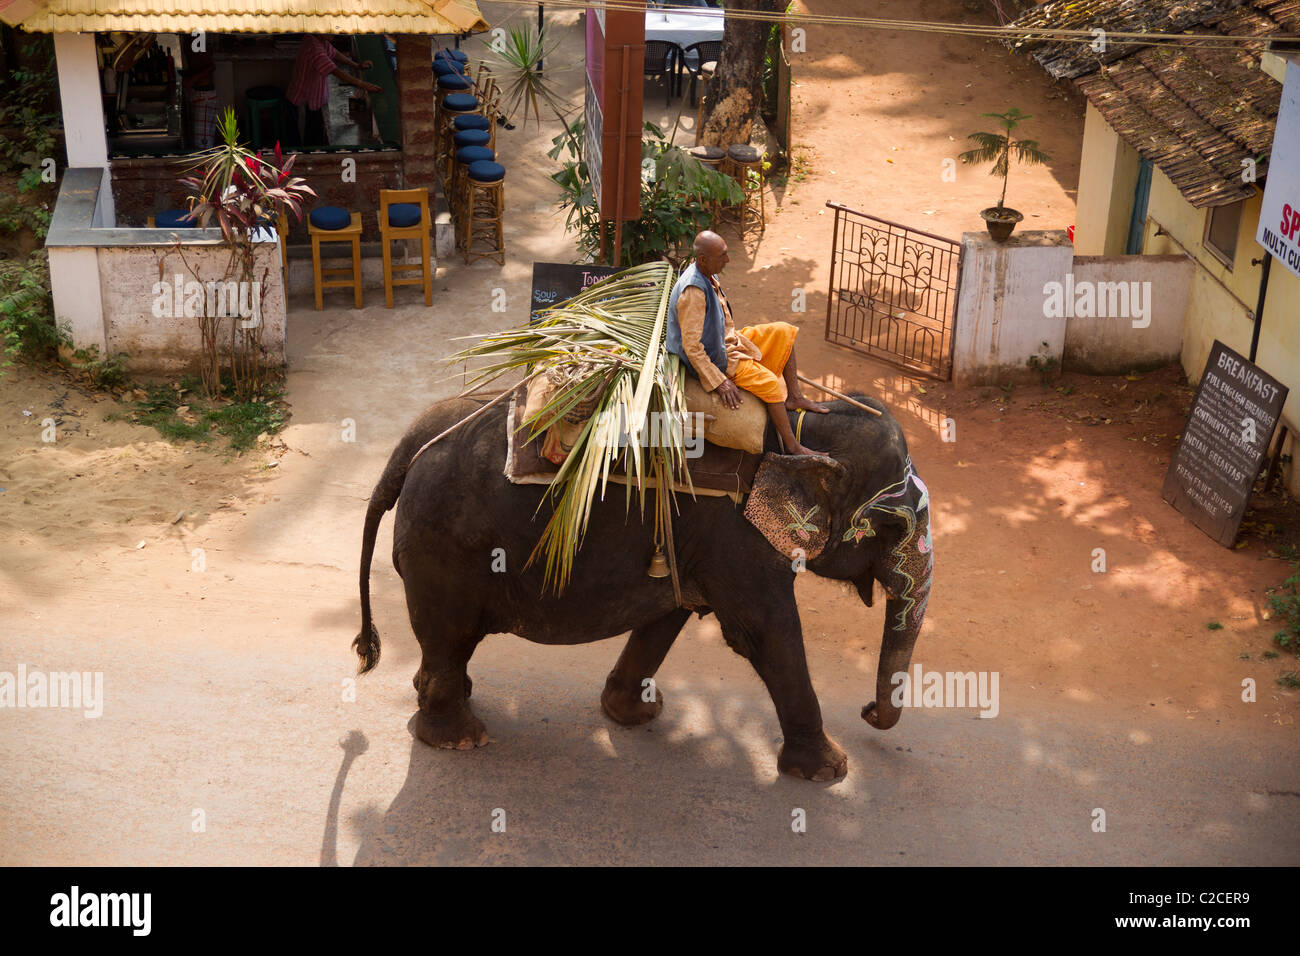 A working elephant in Arpora, Goa India. Stock Photo